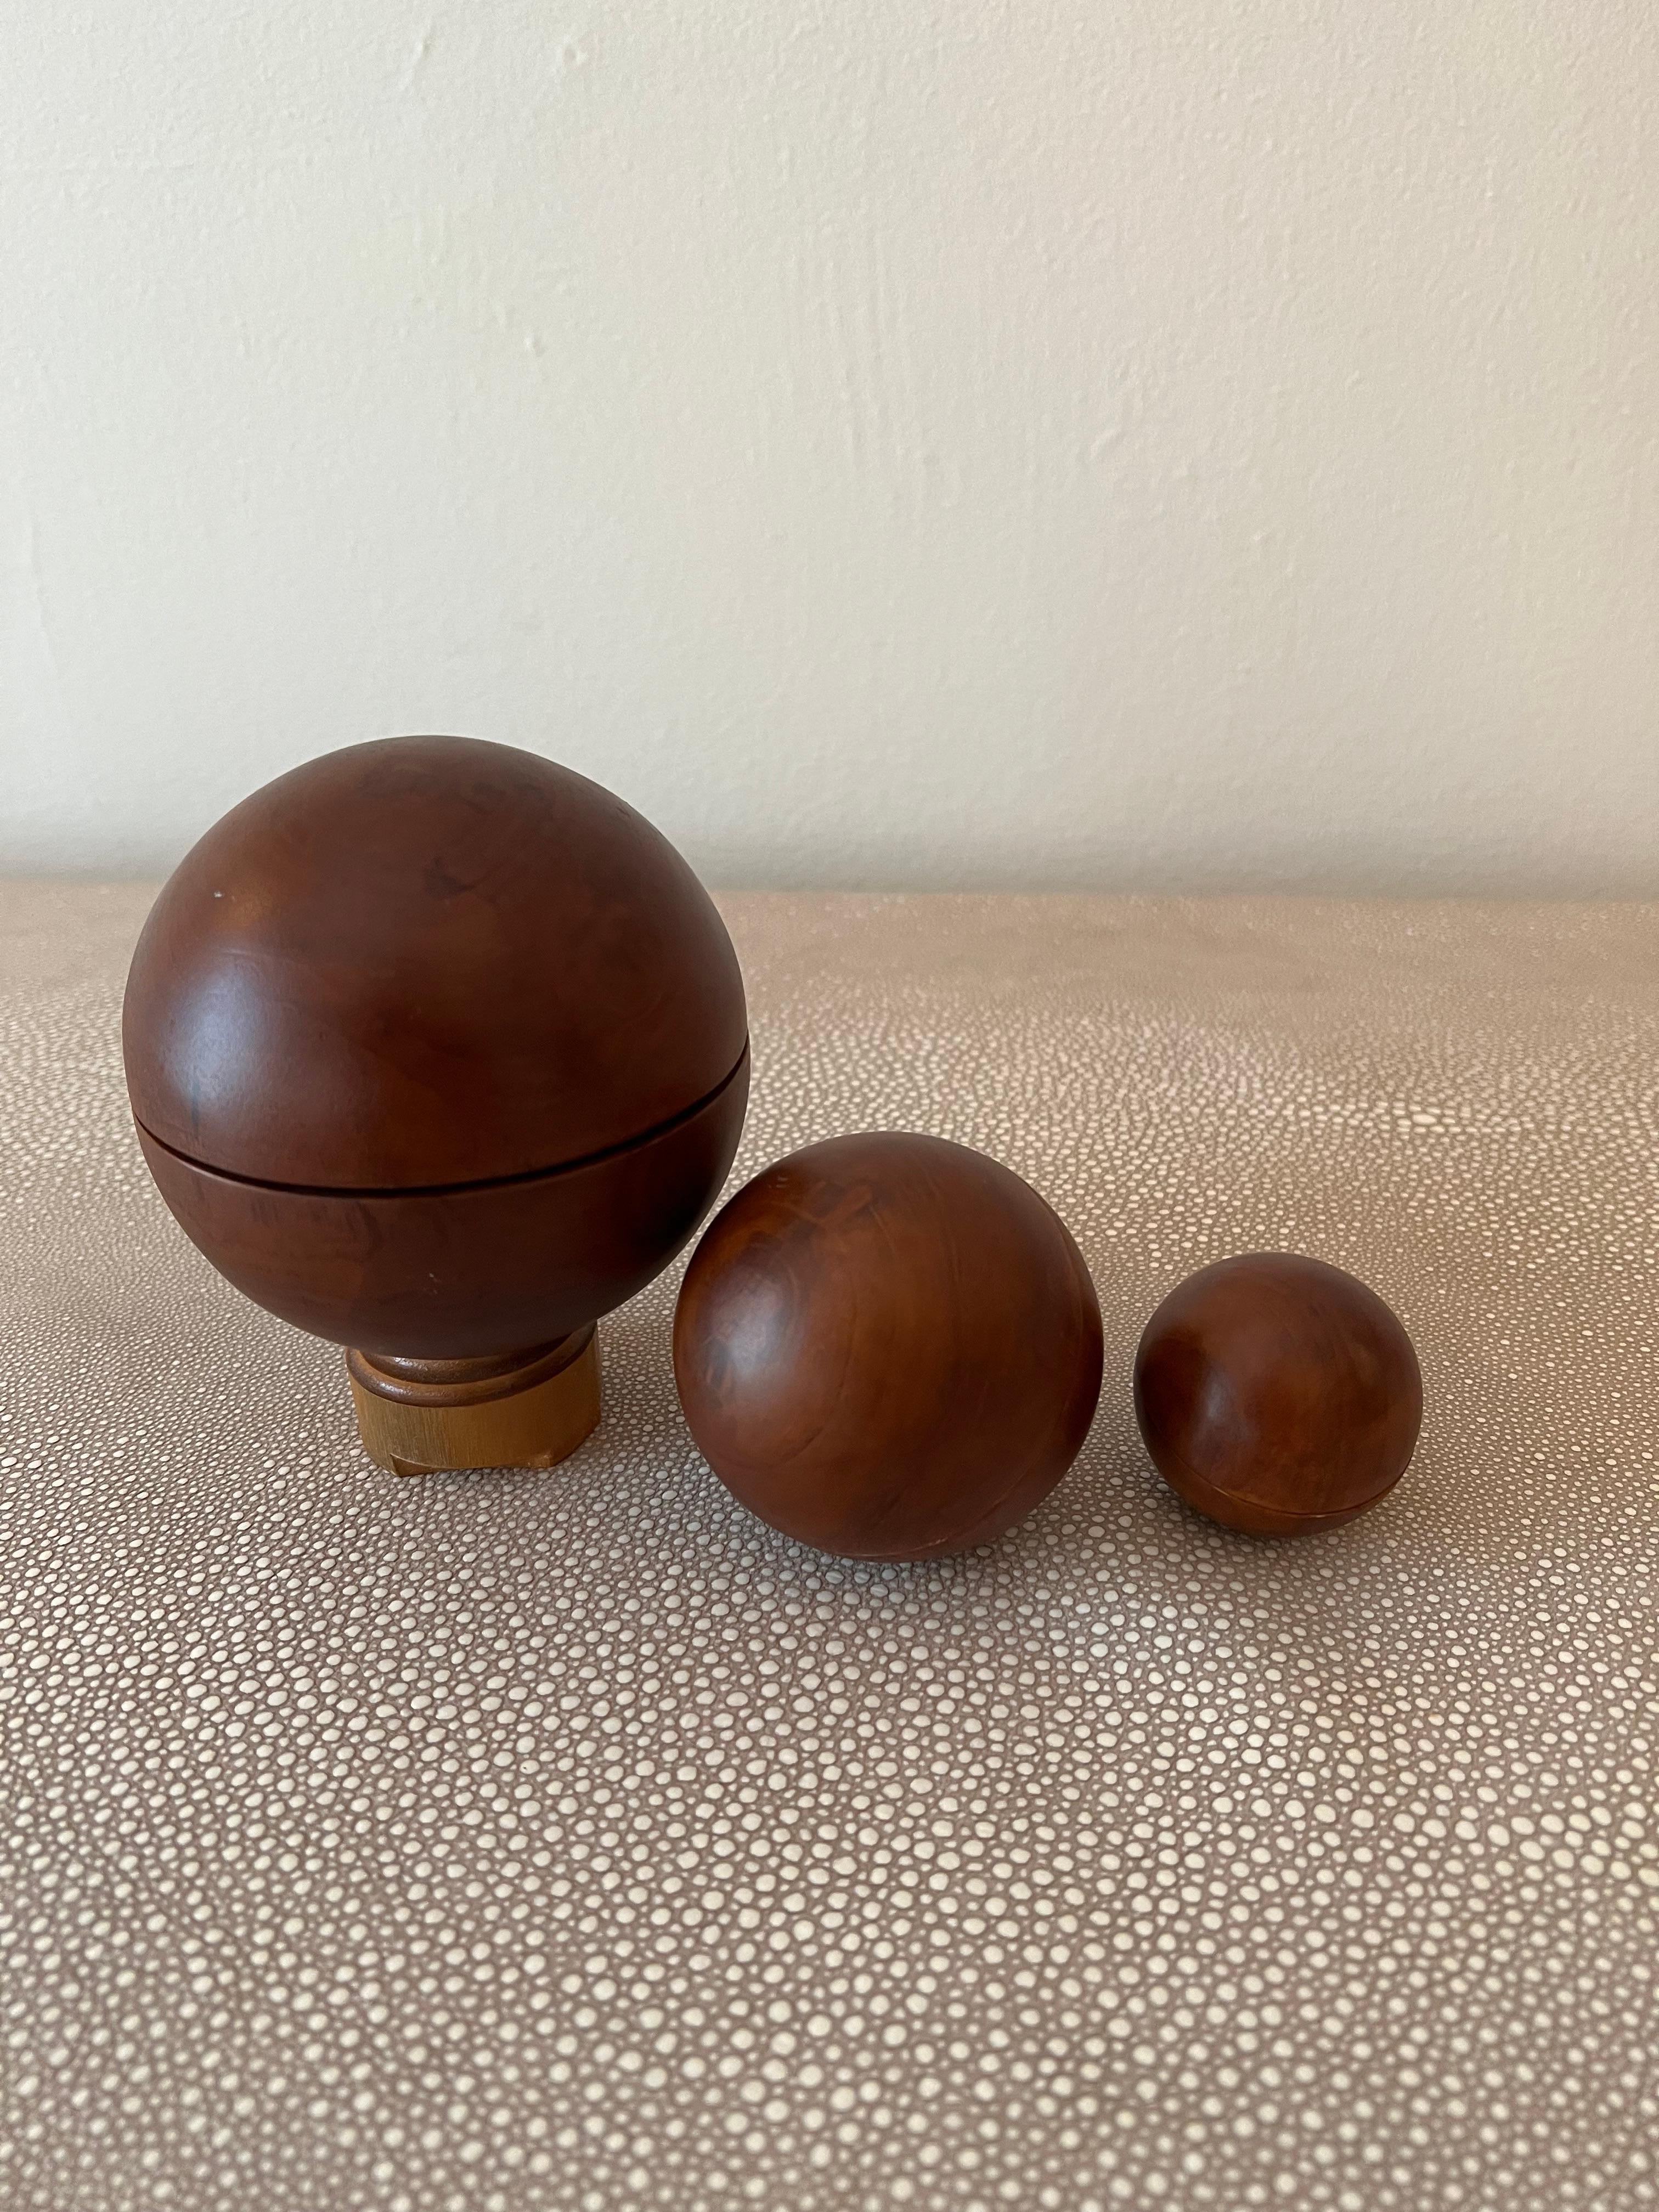 a spherical wooden ball 15 cm in diameter